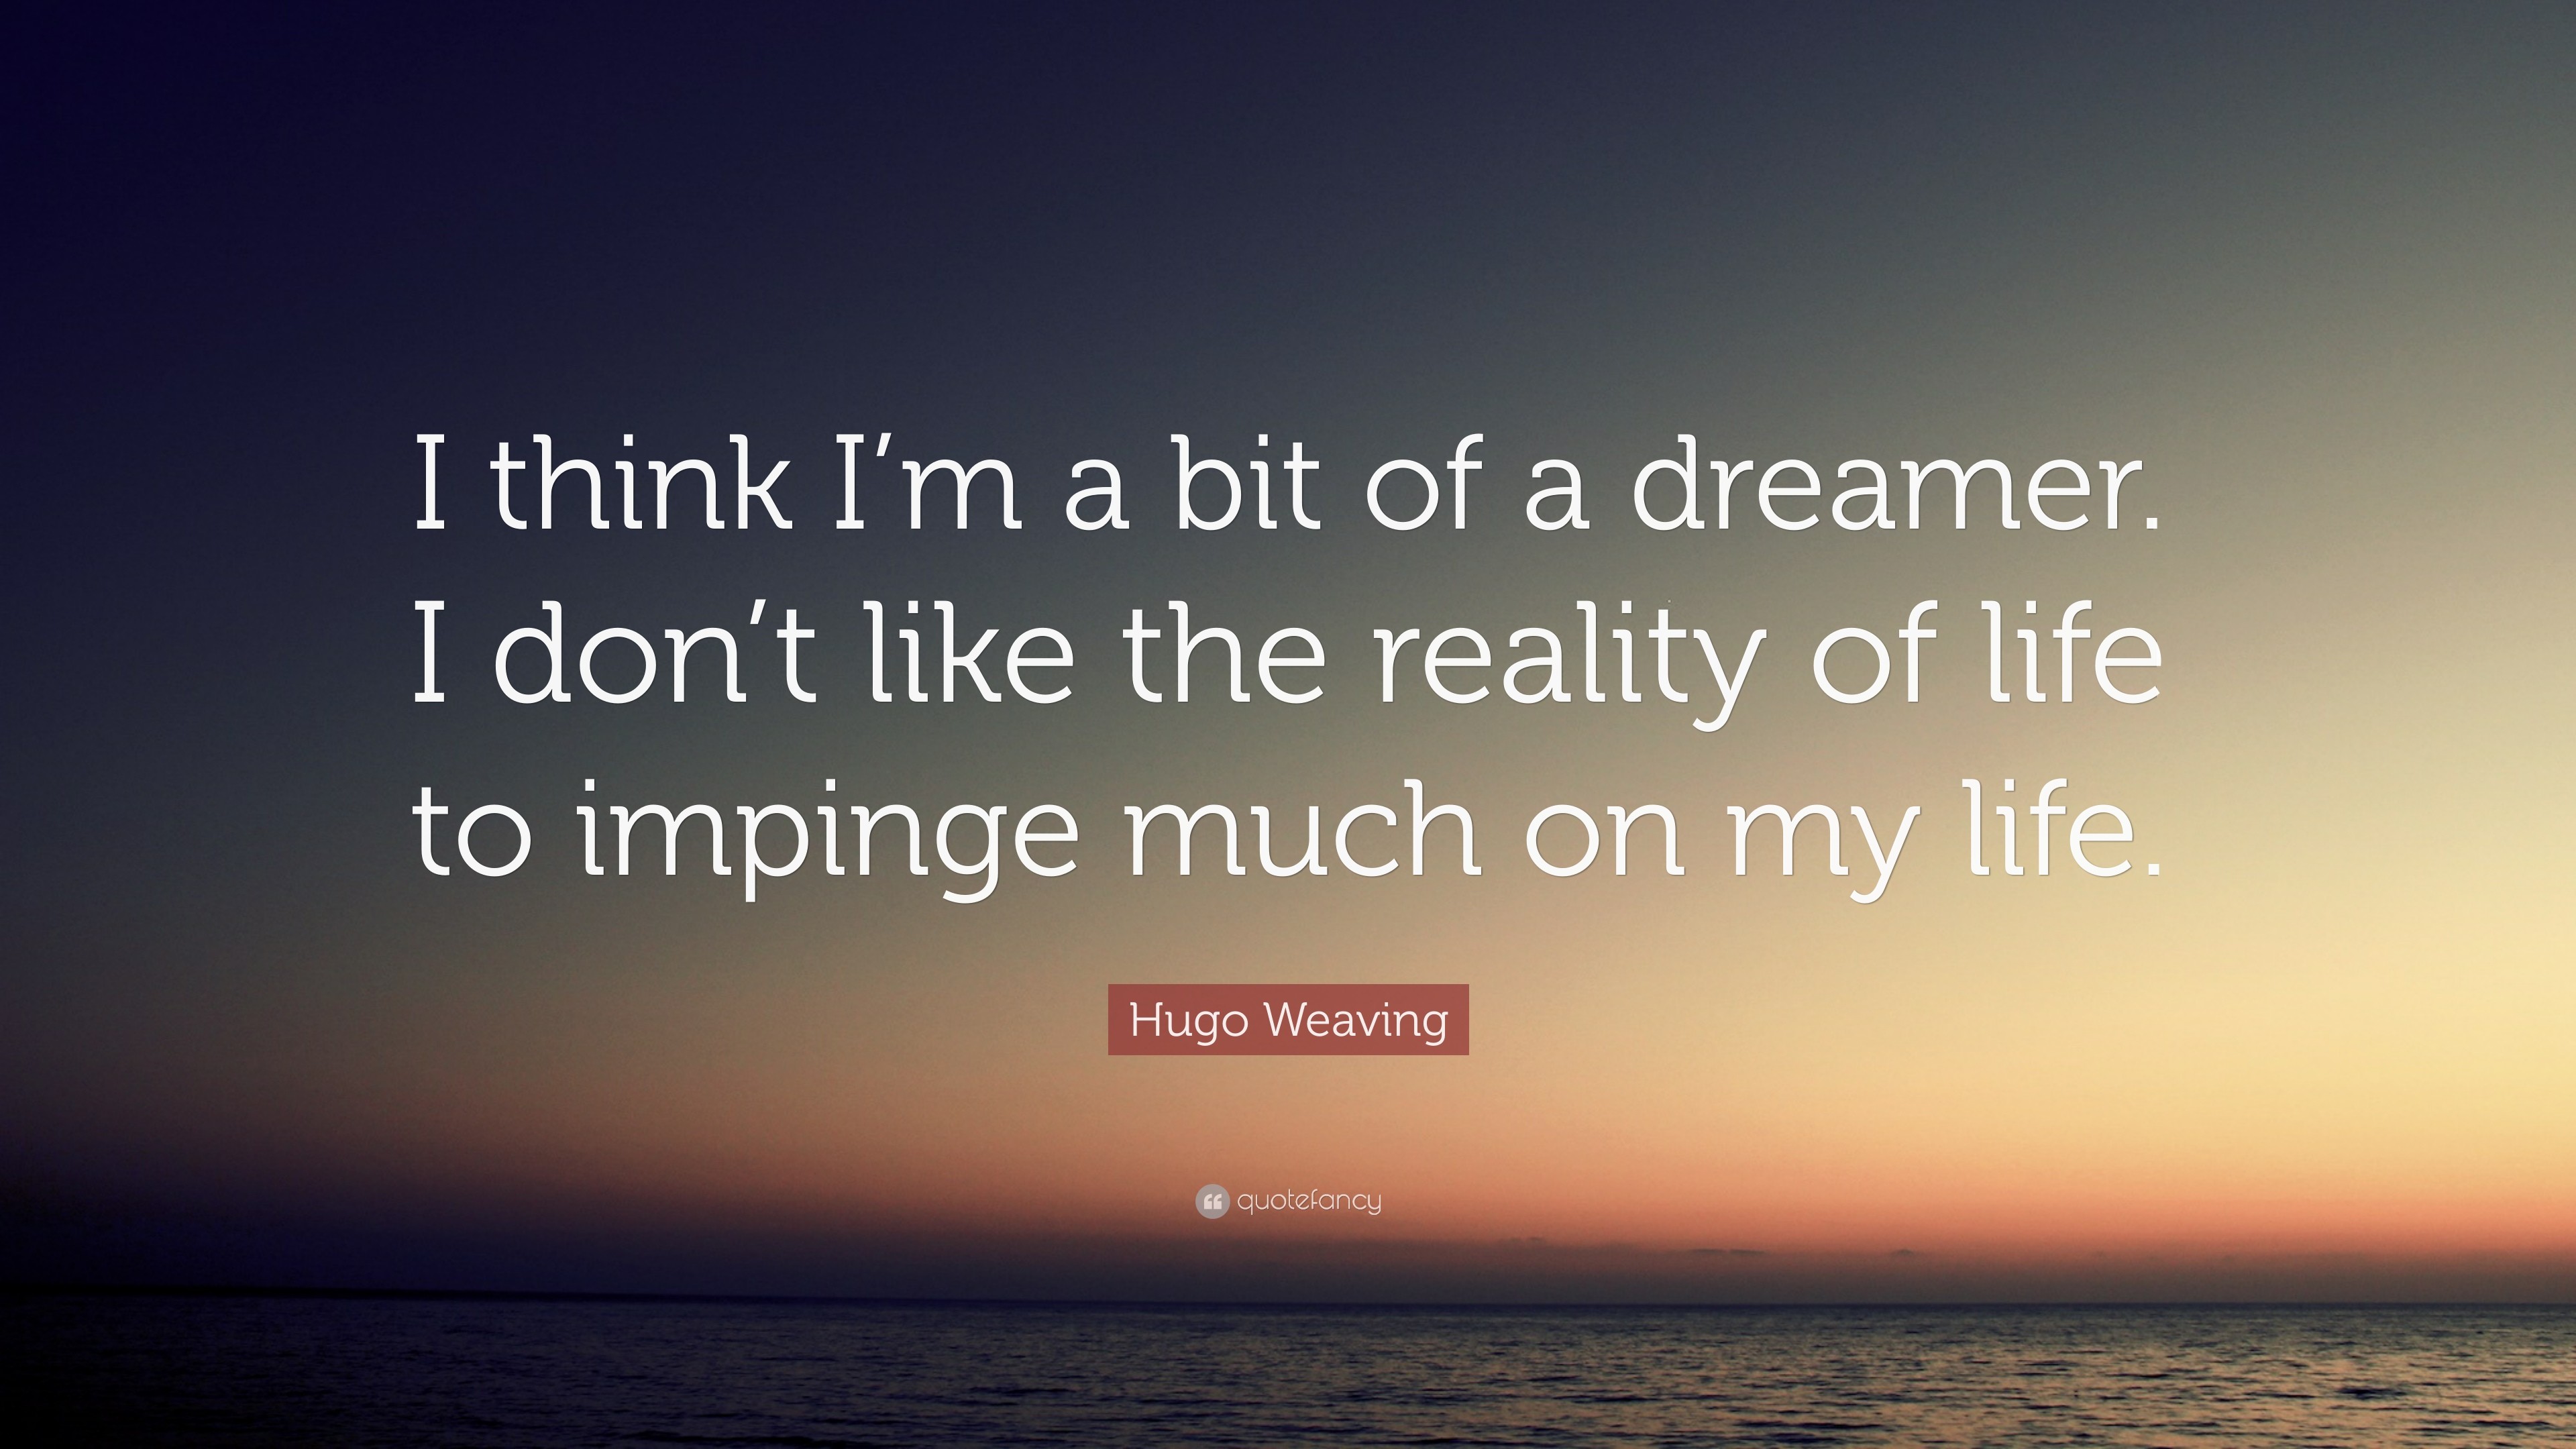 3840x2160 Hugo Weaving Quote: “I think I'm a bit of a dreamer.